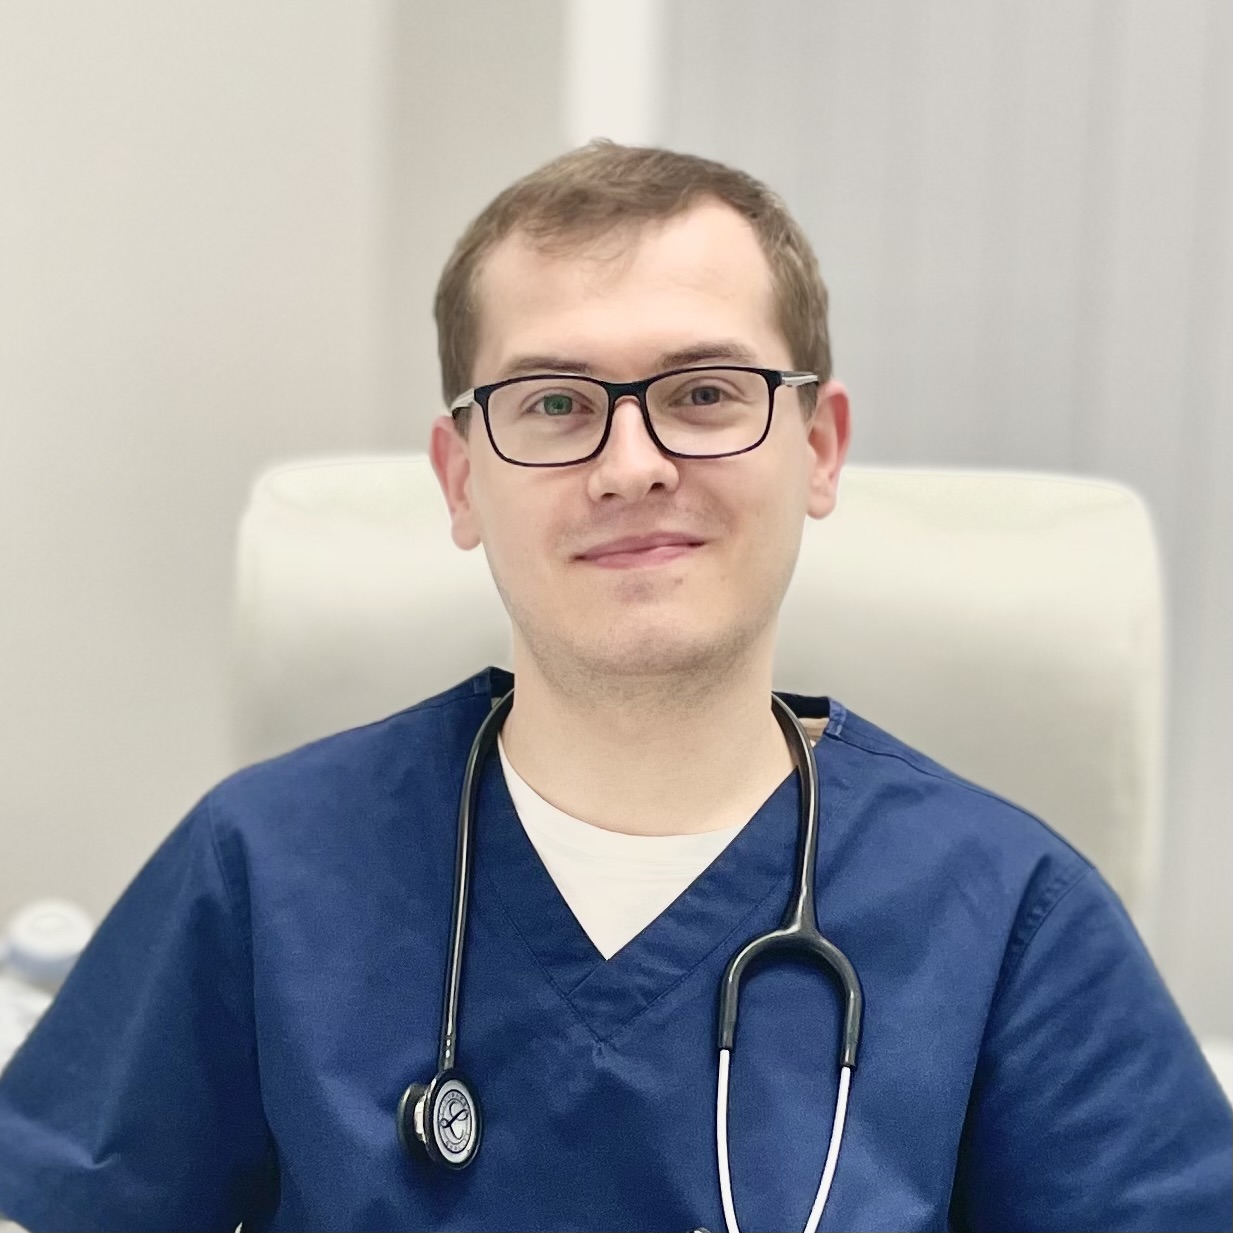 Kardiolog Wrocław - lek. Konrad Reszka